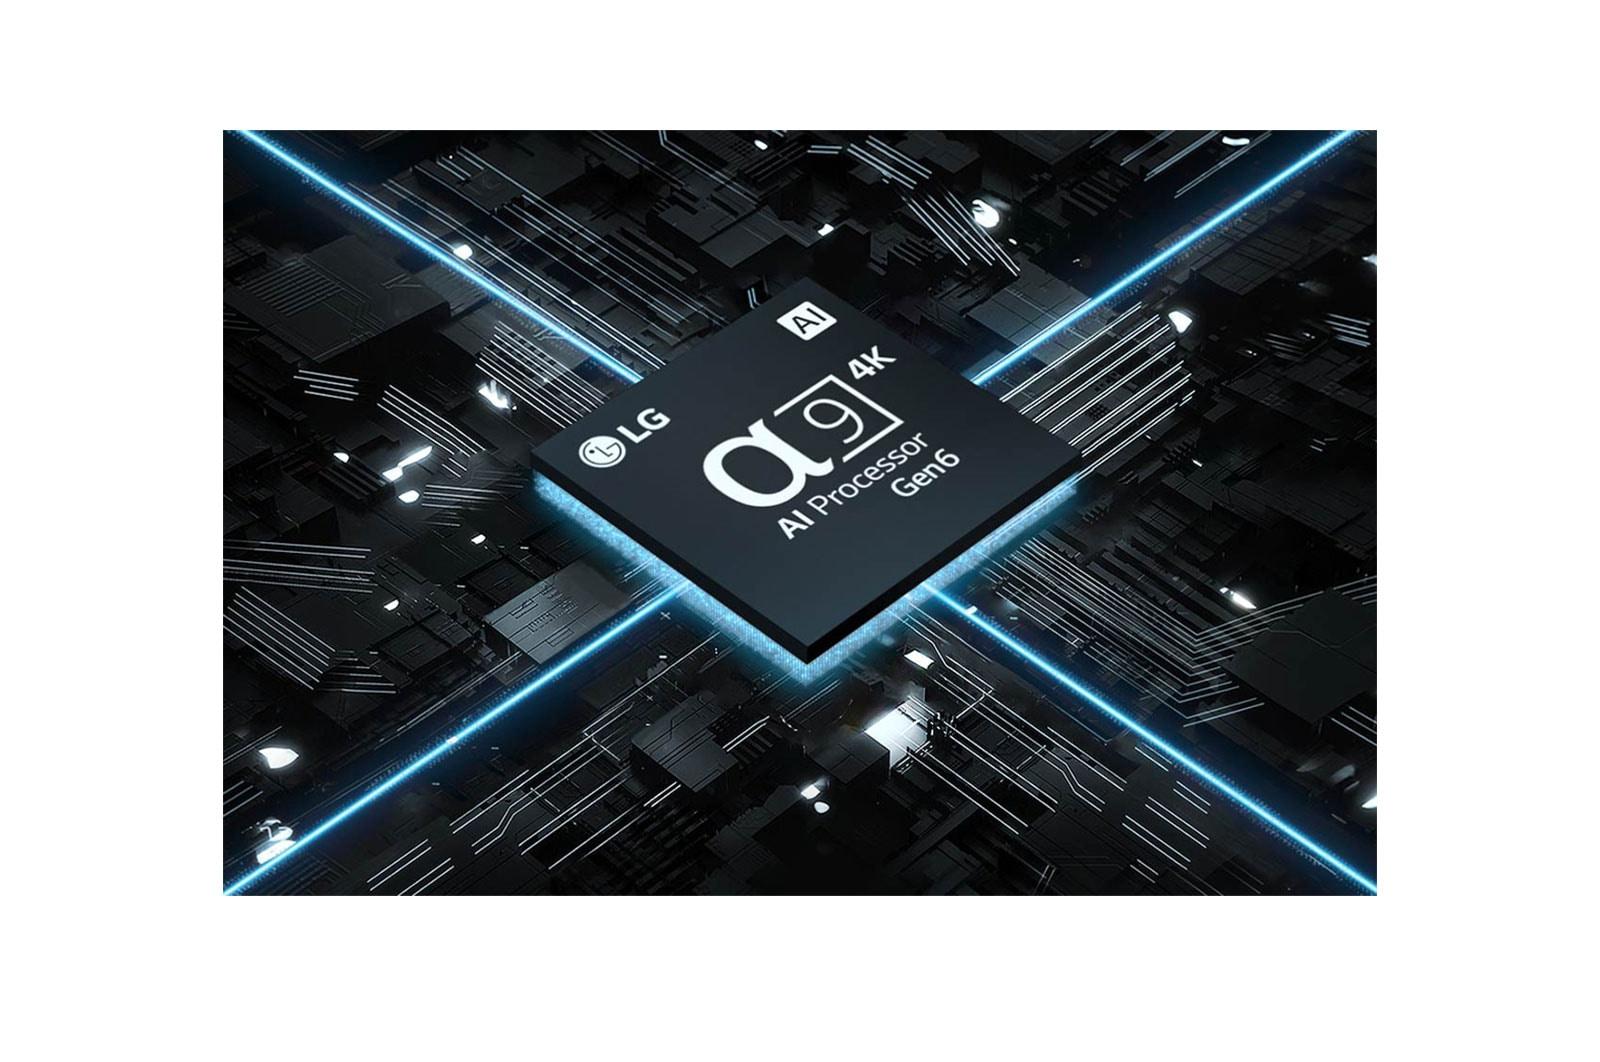 LG OLED evo C3 55 inch 4K Smart TV 2023